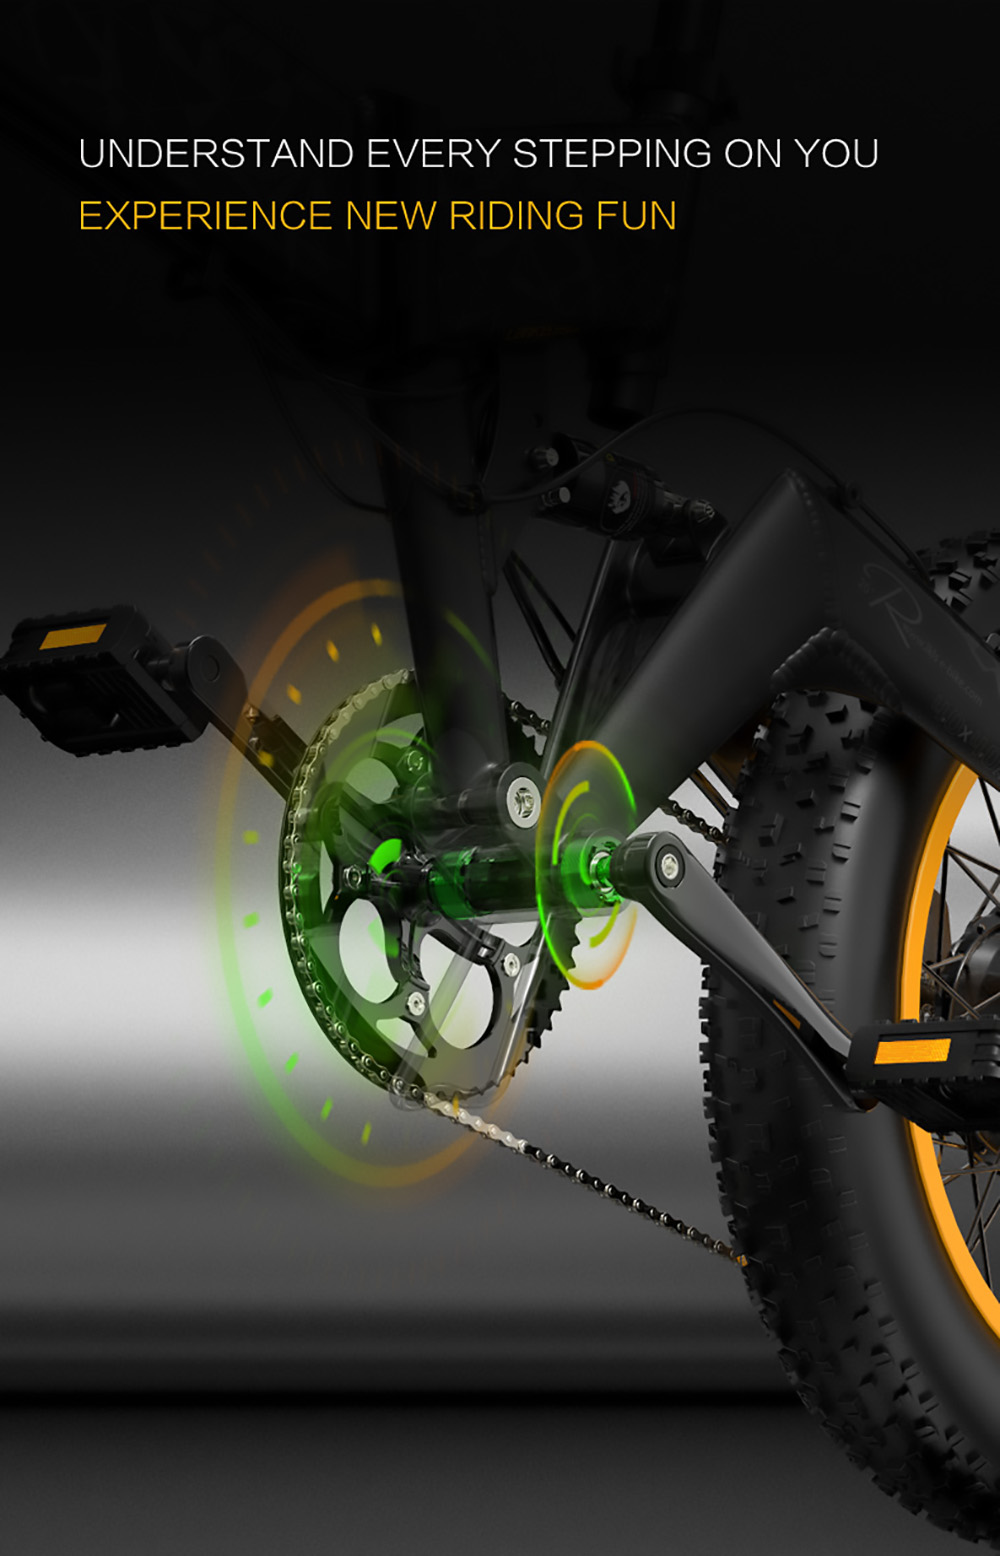 LANKELEISI X3000 Plus Folding Electric Mountain Bike Big Fork 48V 1000W Motor 17.5Ah batéria - čierna & žltá